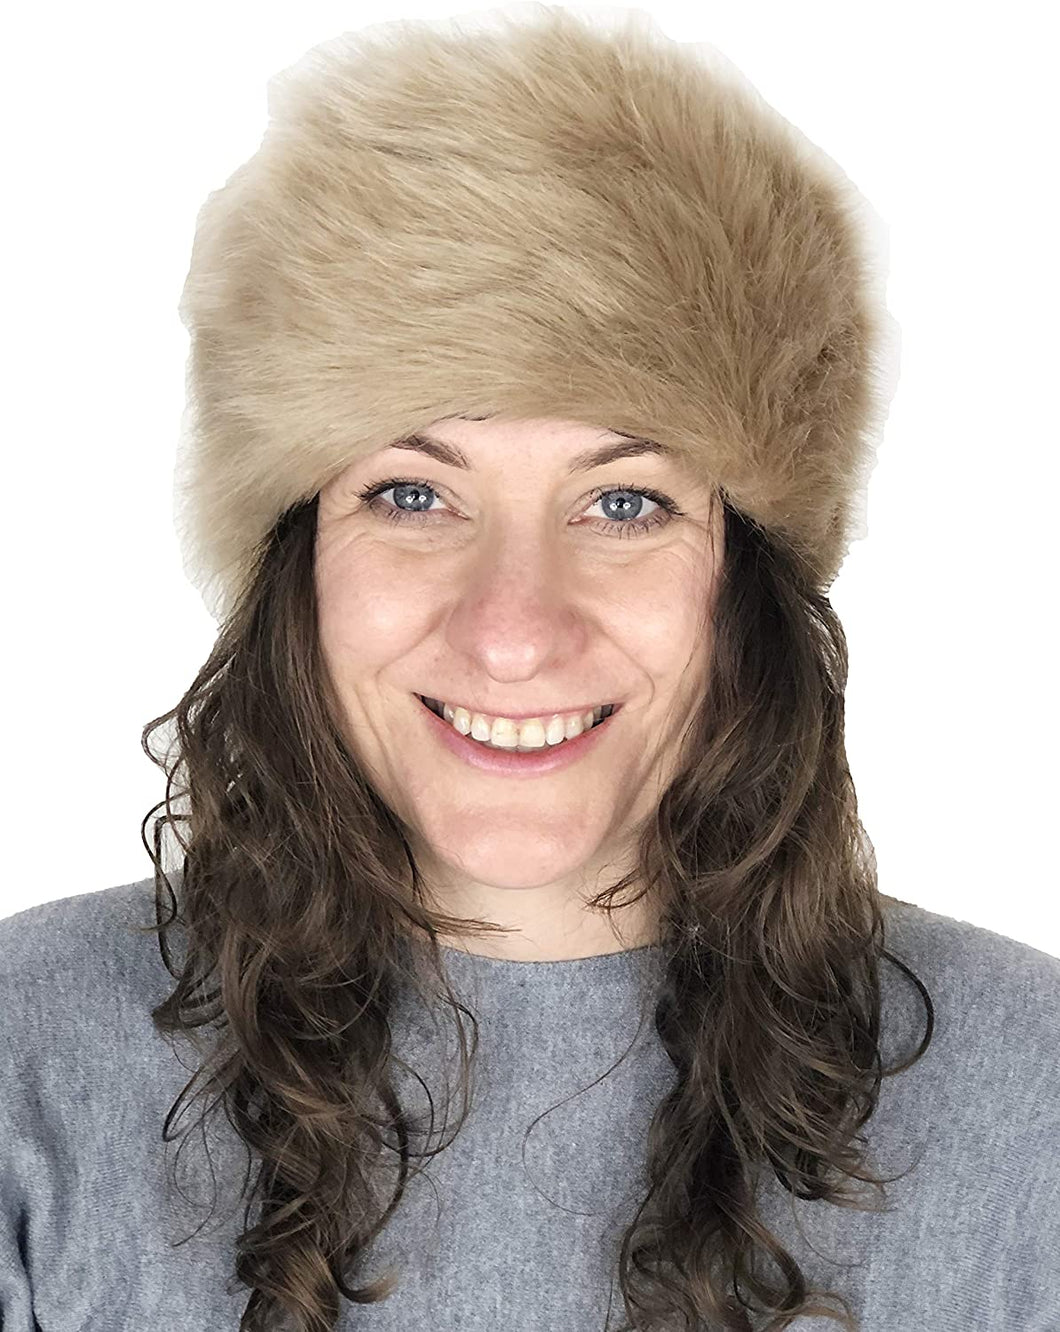 Tan/Brown Faux Fur hat. Lovely Winter Russian Style hat